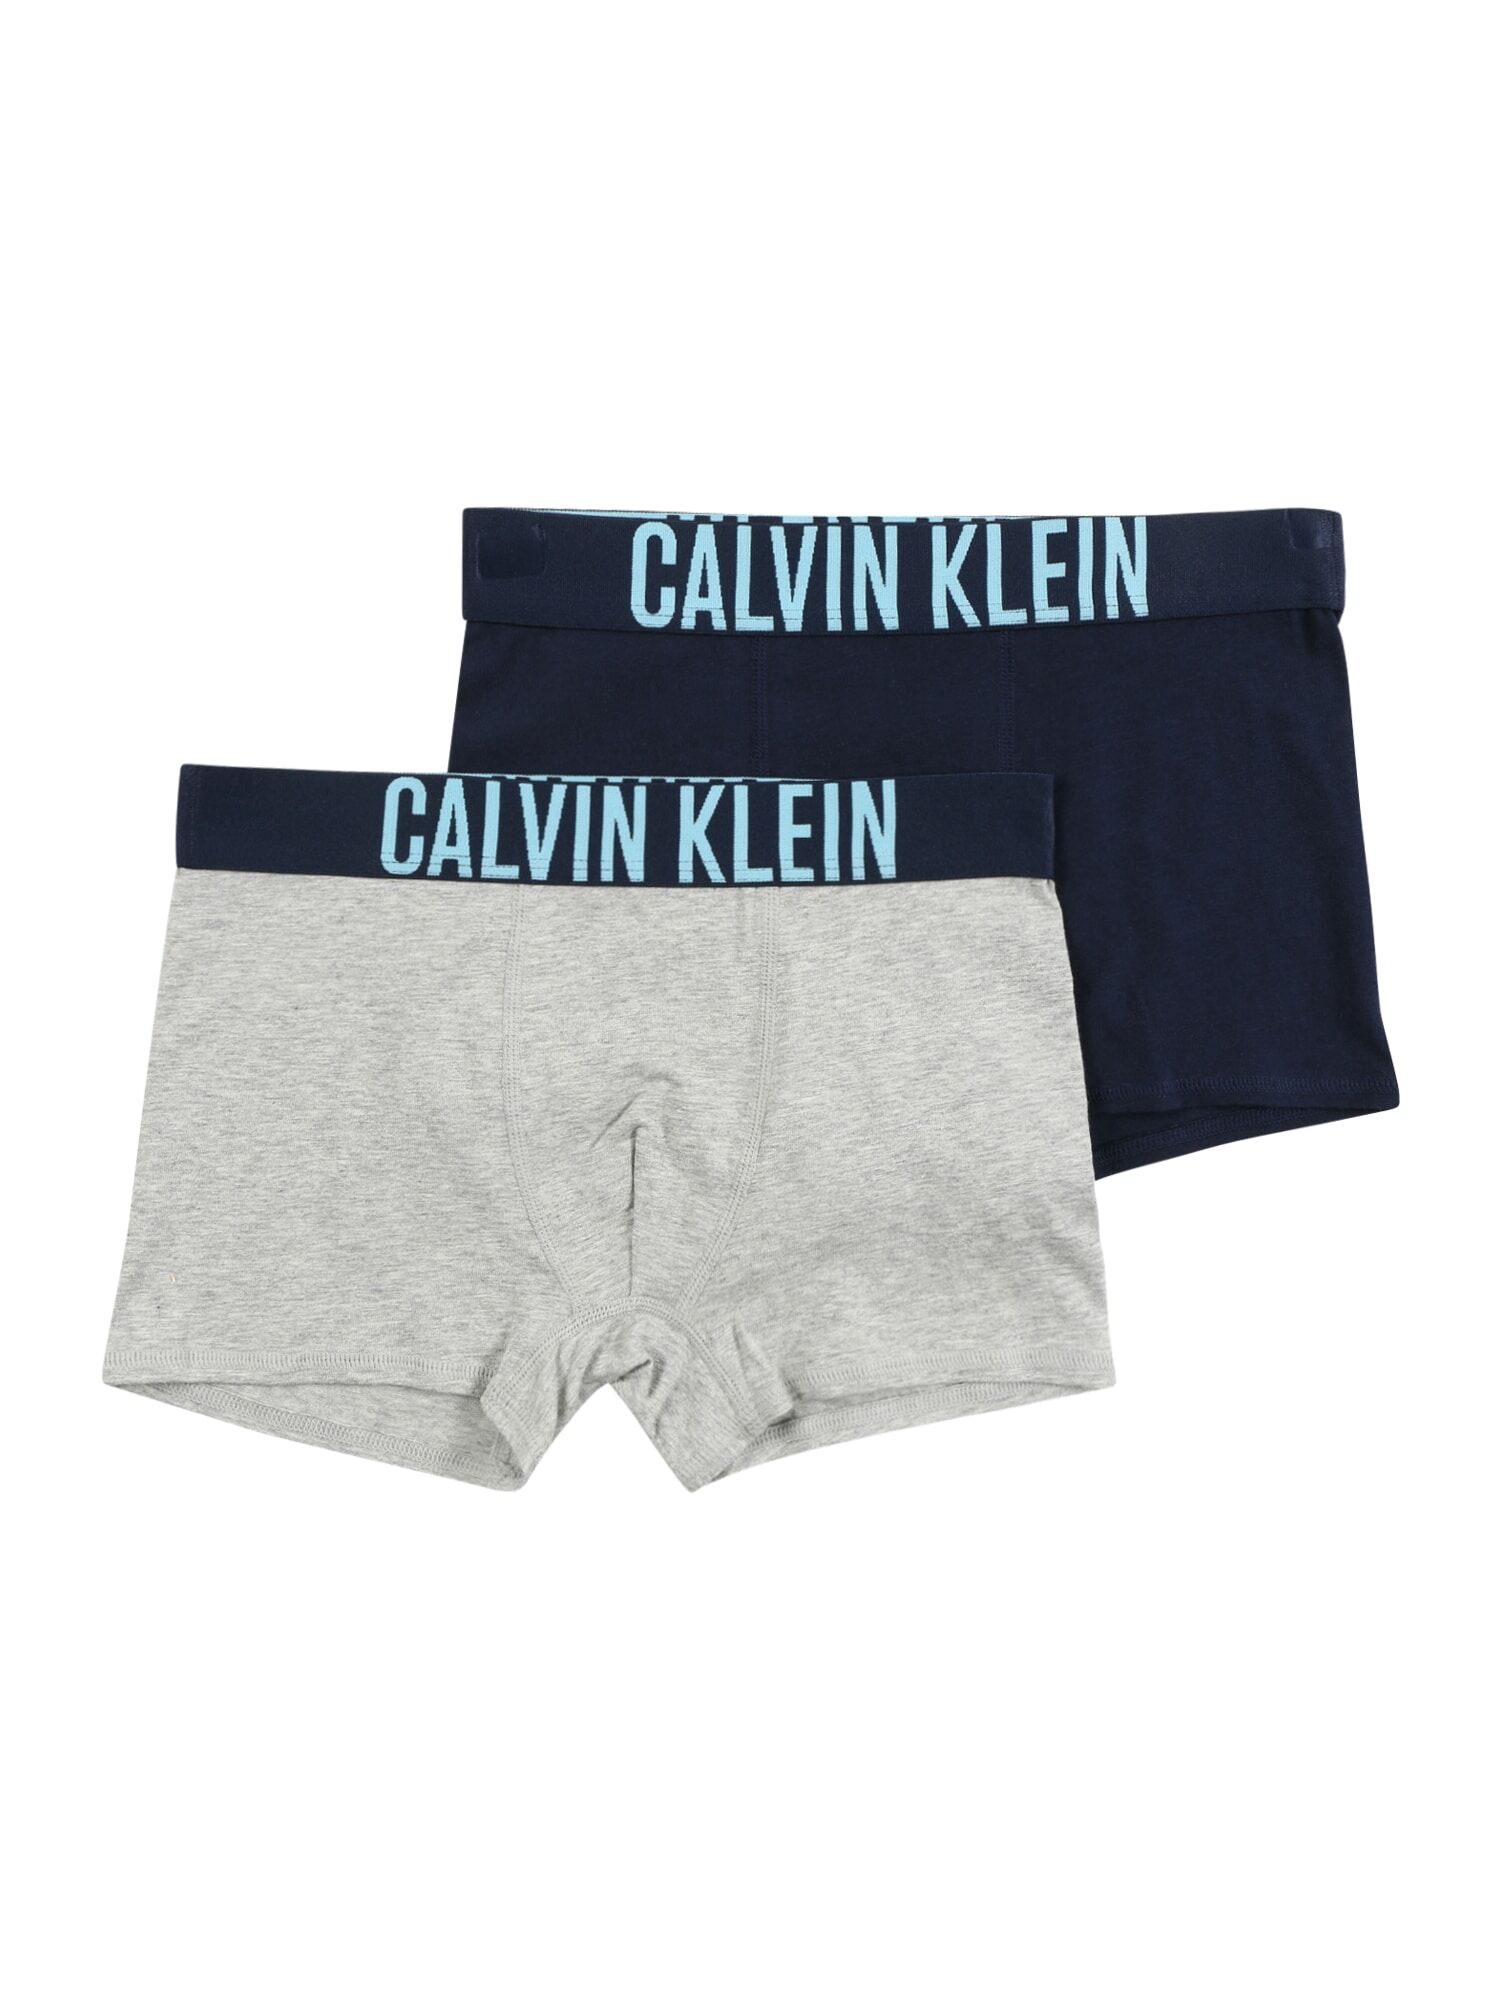 Calvin Klein Underwear Pantaloncini intimi Grigio, Blu